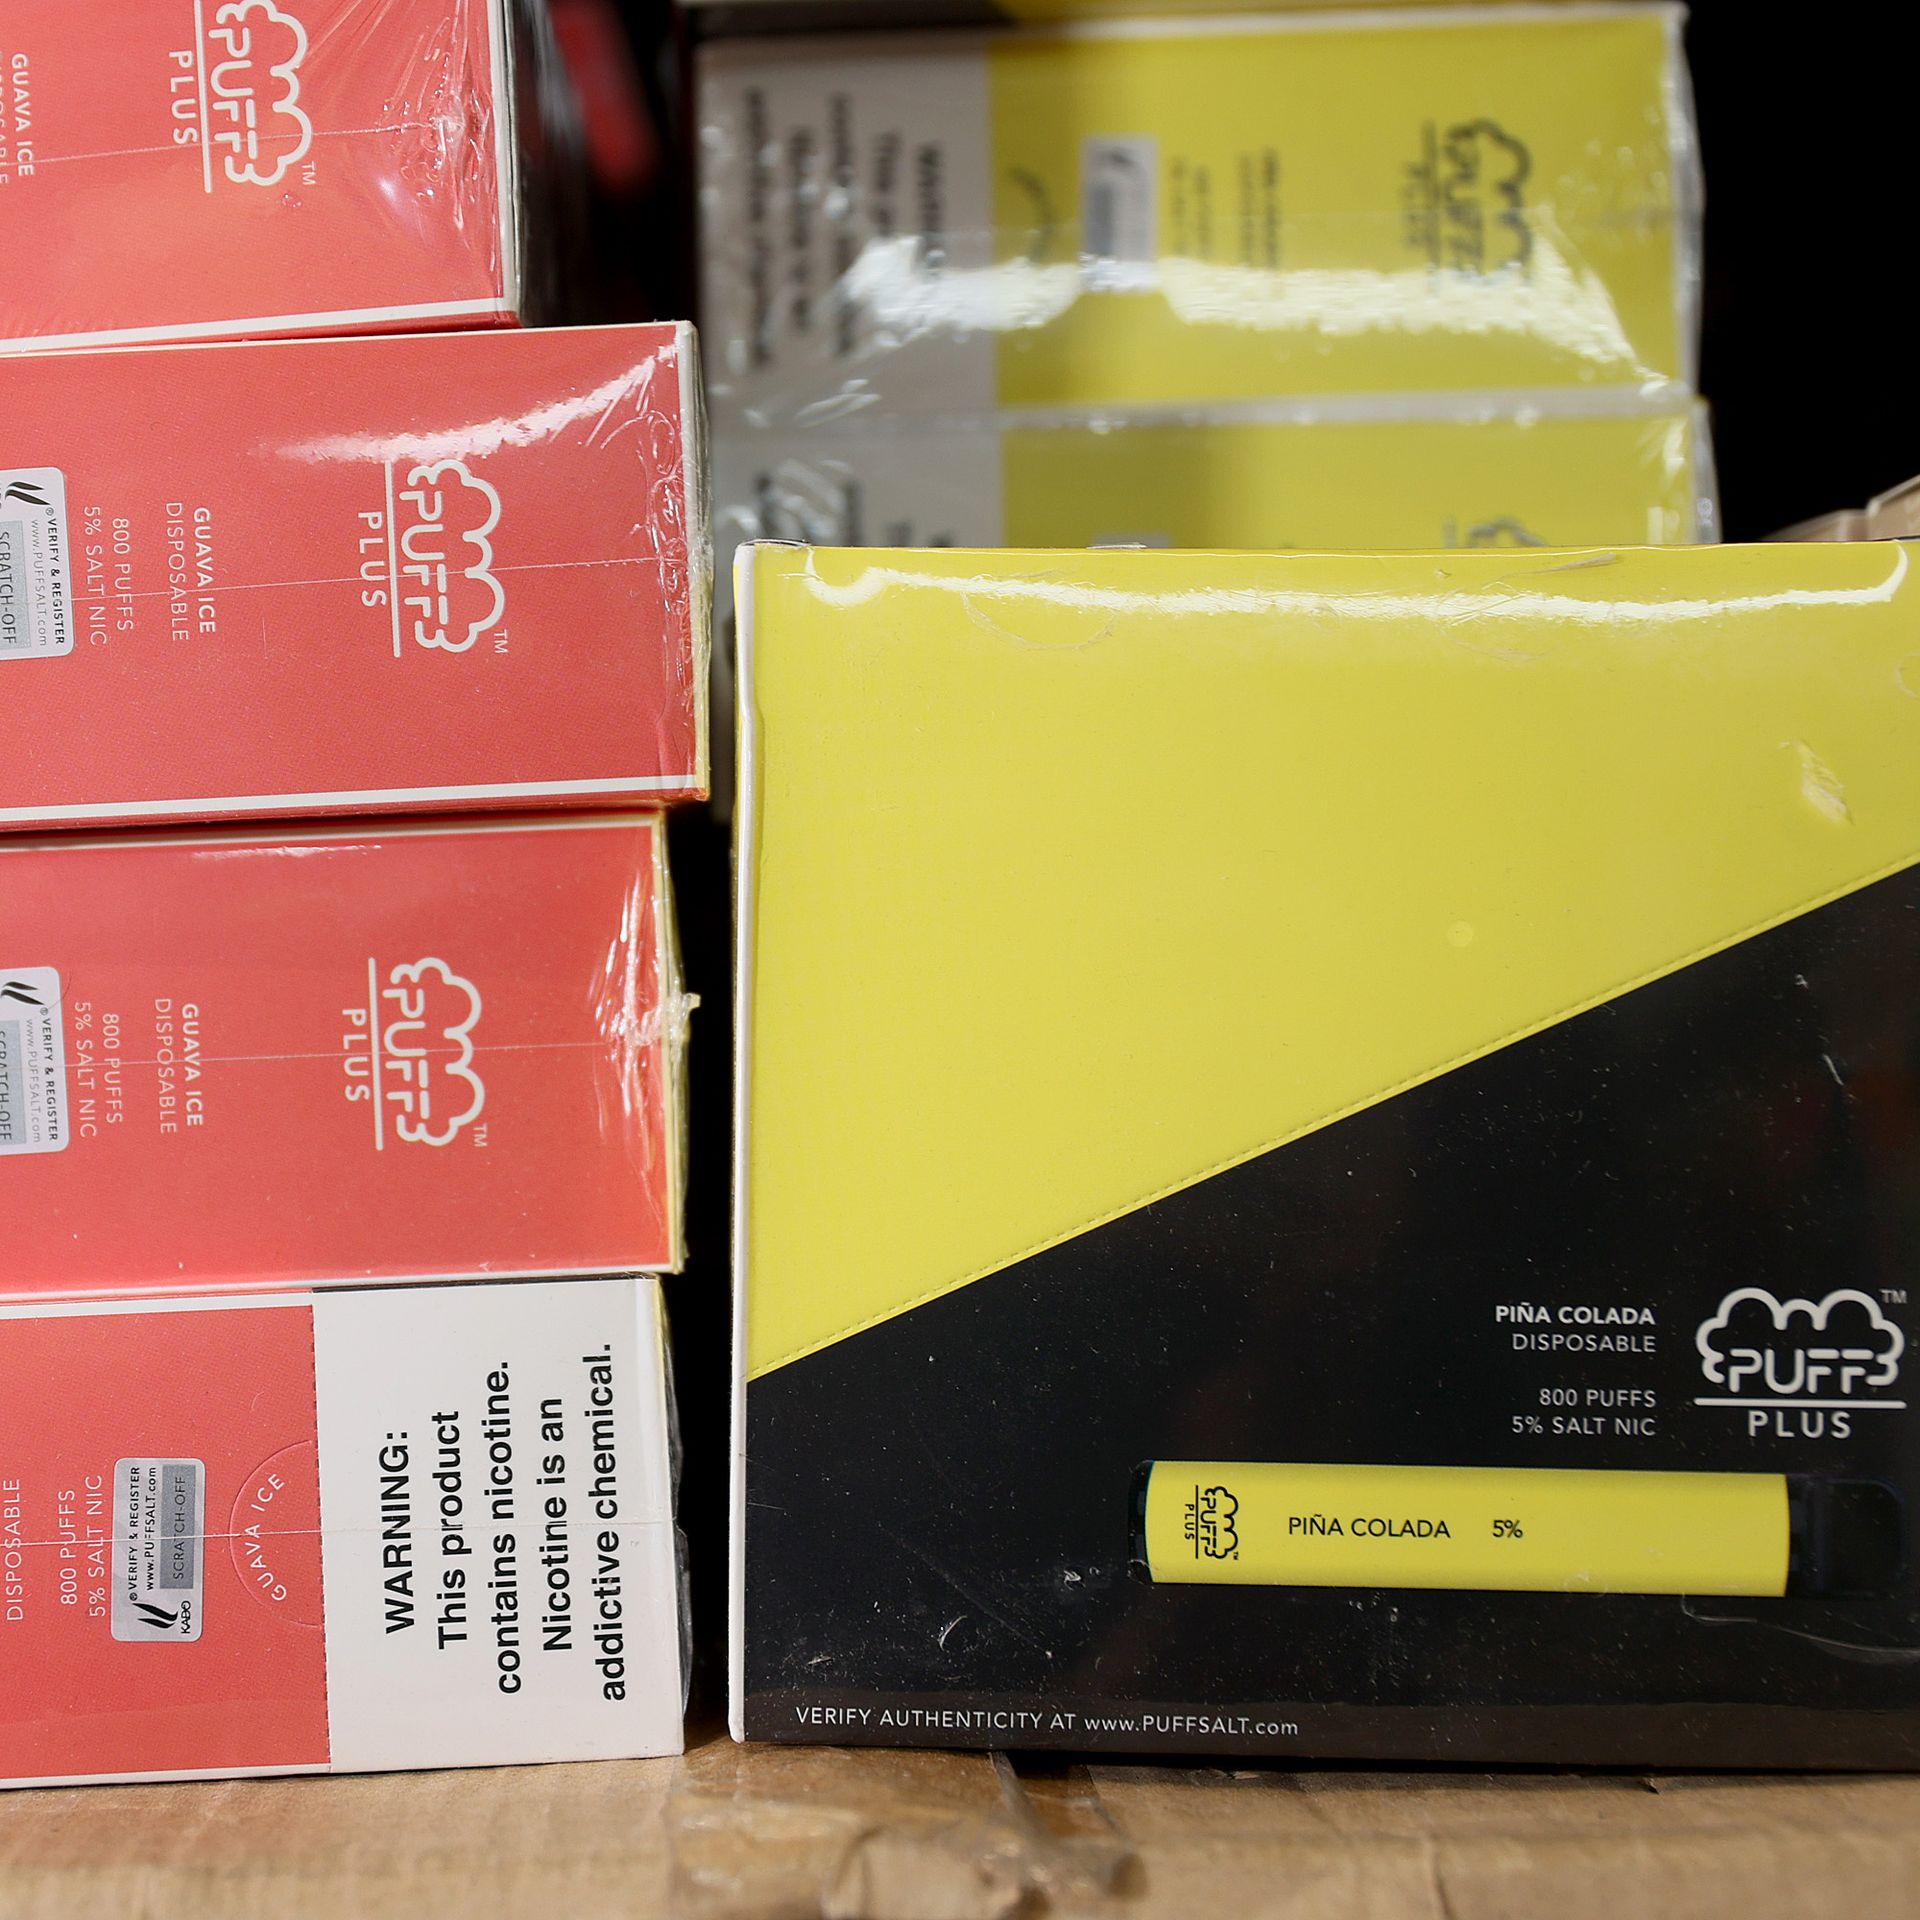 Boxes of Puff Plus E-Cigarette products